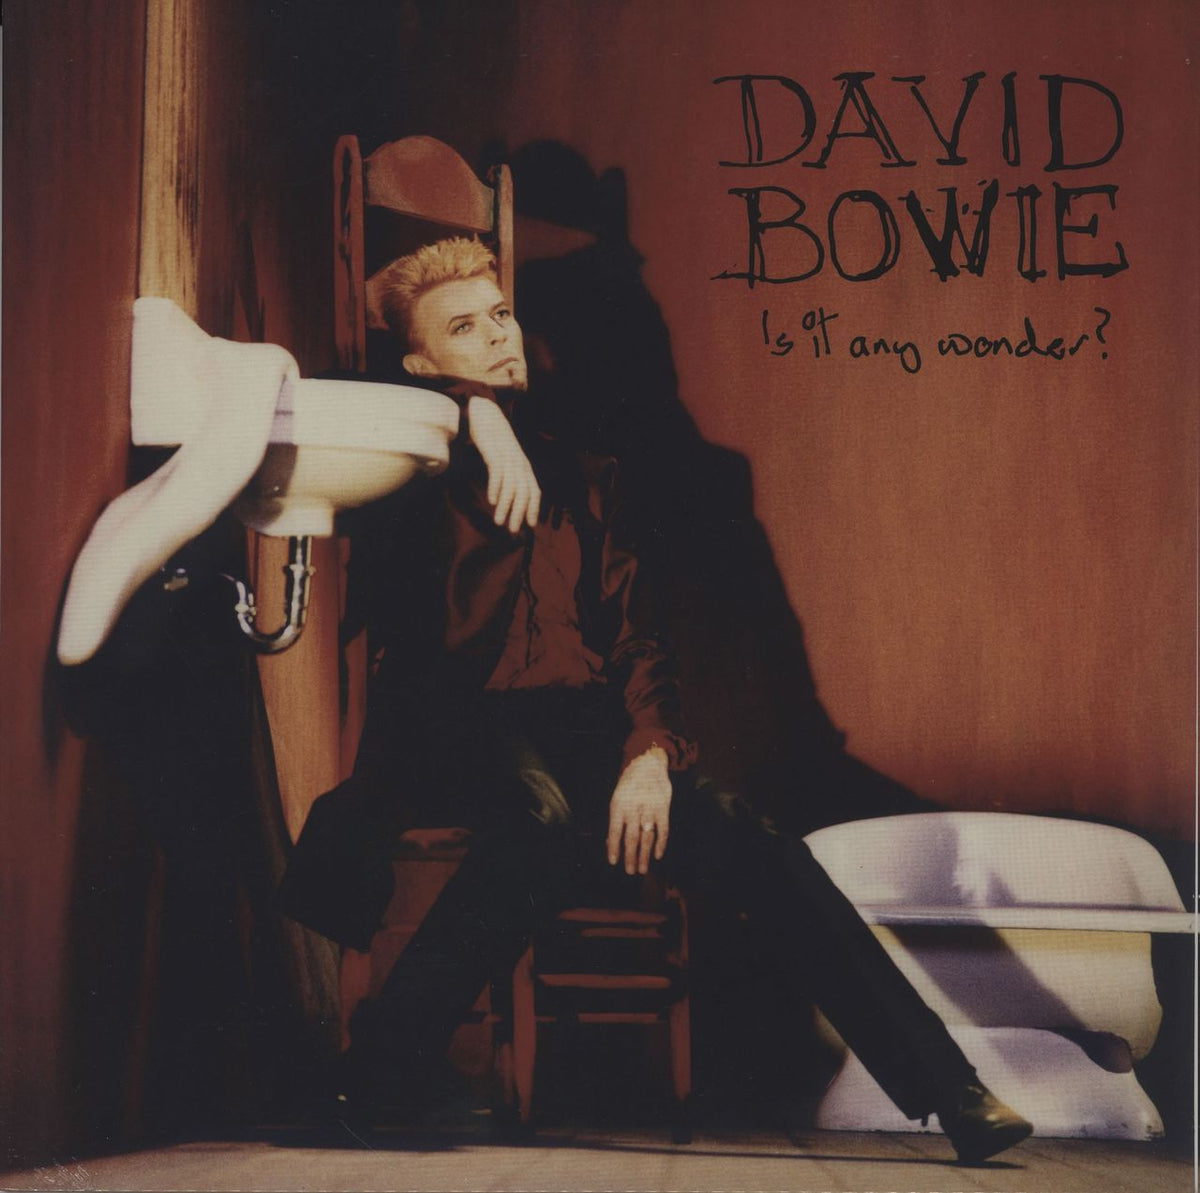 David Bowie Is It Any Wonder? - Sealed UK 12